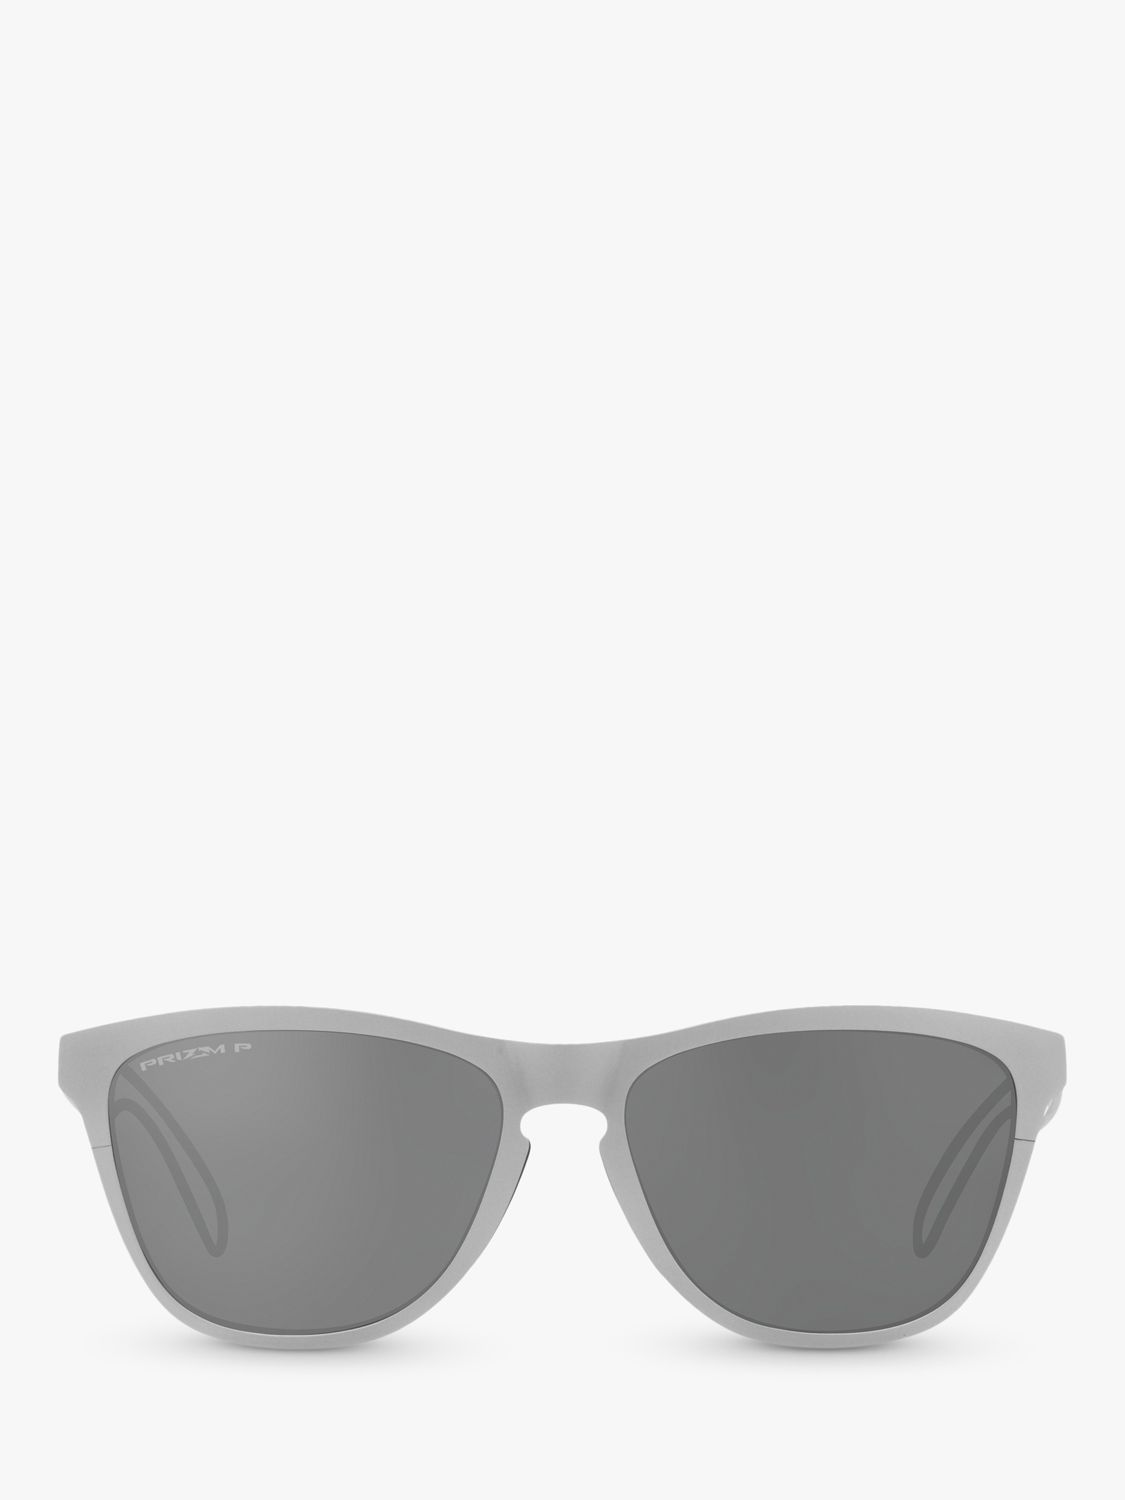 Oakley OO60446 Men's Frogskins Sunglasses, Raw Titanium